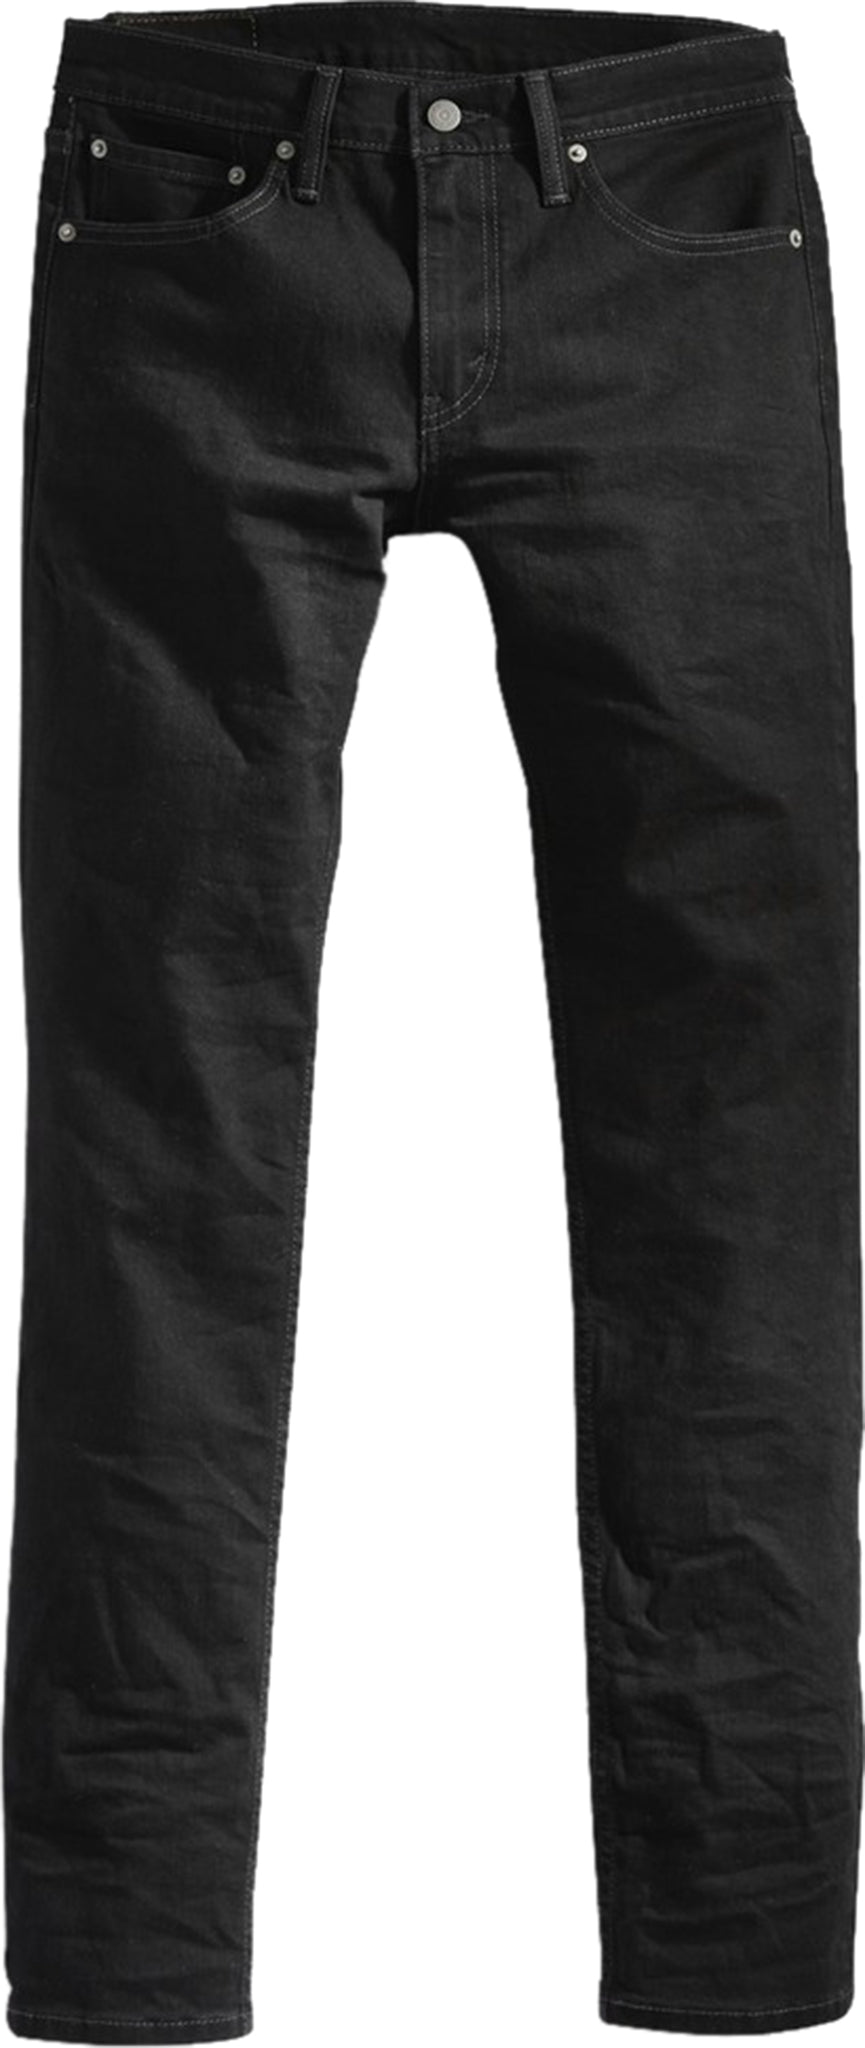 511™ Slim Fit Advanced Stretch Jeans - Medium Wash